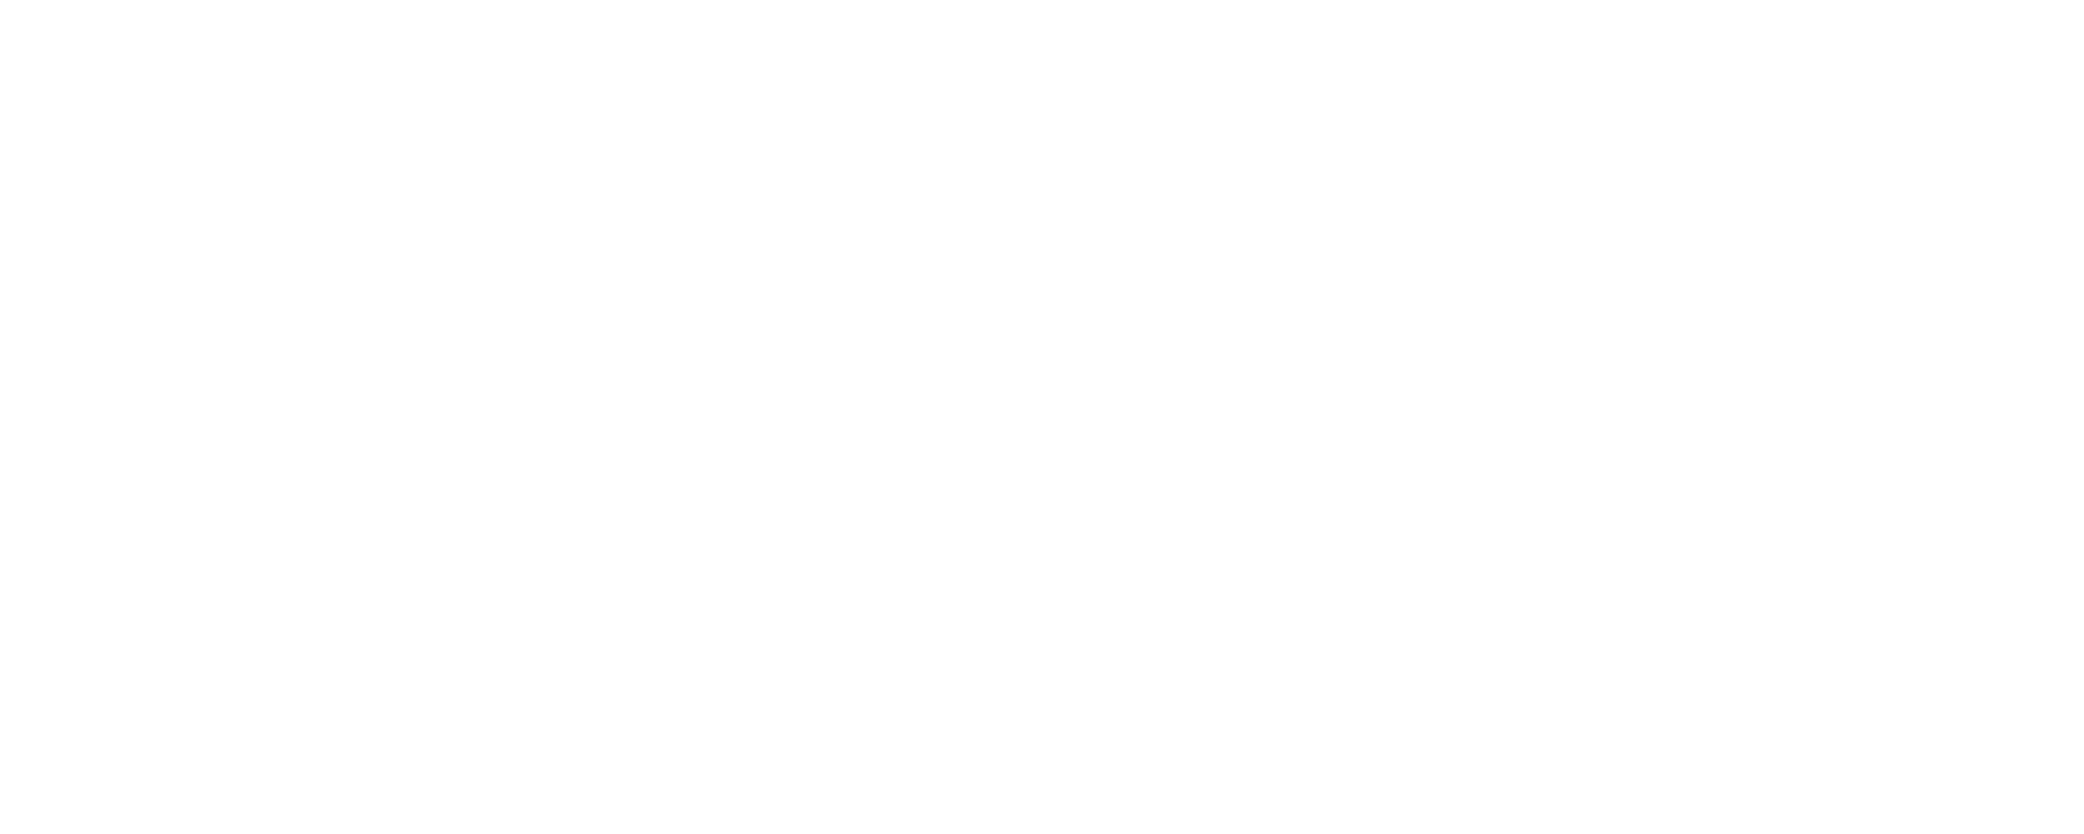 Ascend White 3 logo